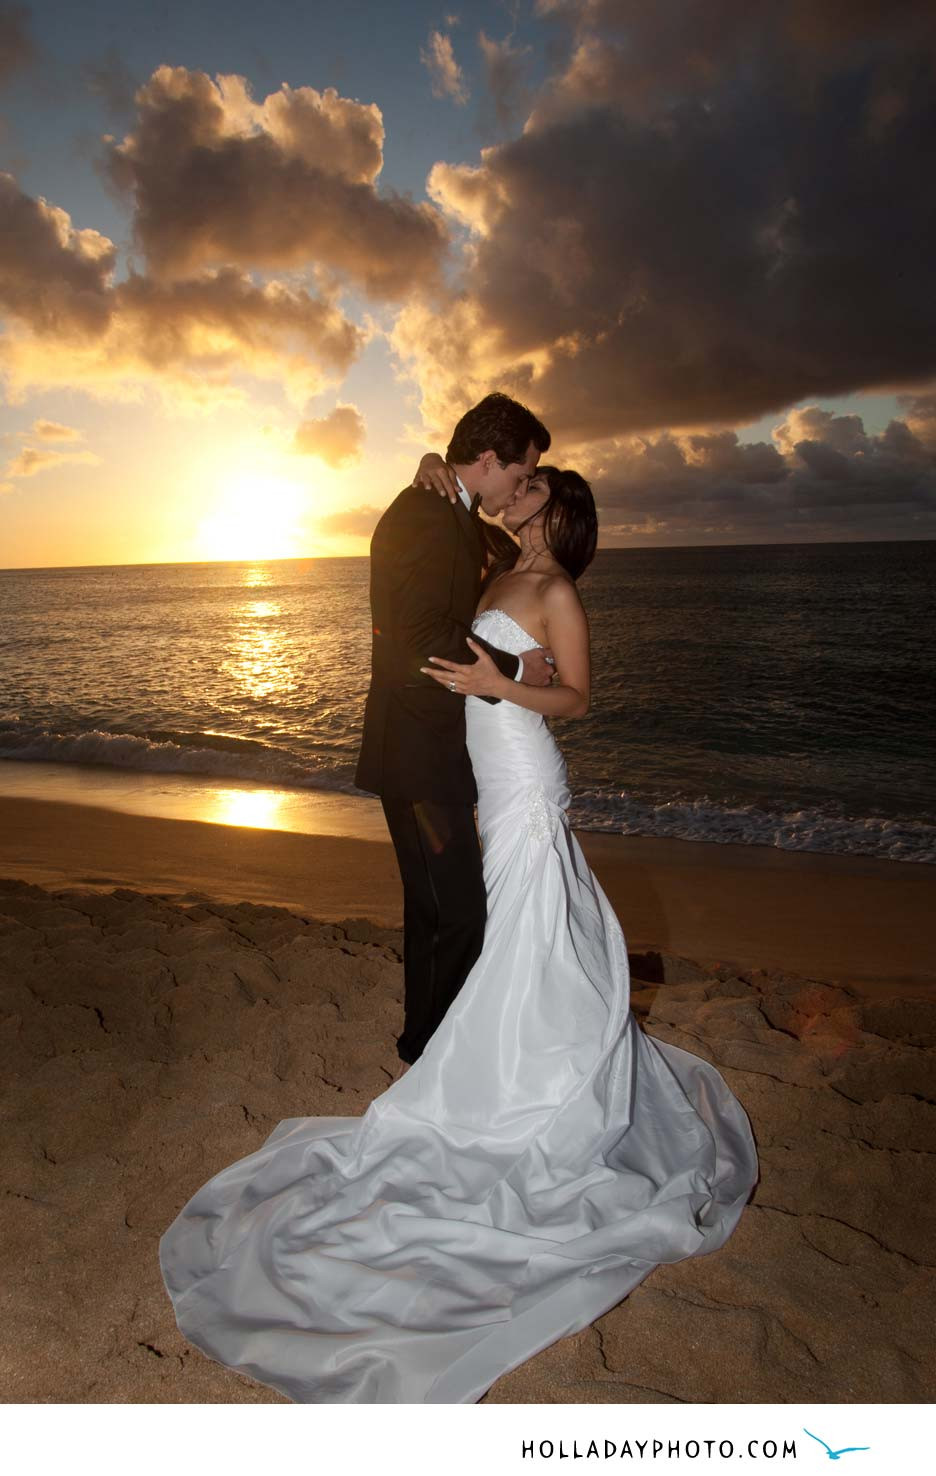 Beach Wedding Photography
 ISABELLA & RYAN SUNSET BEACH WEDDING PHOTOGRAPHY – NORTH